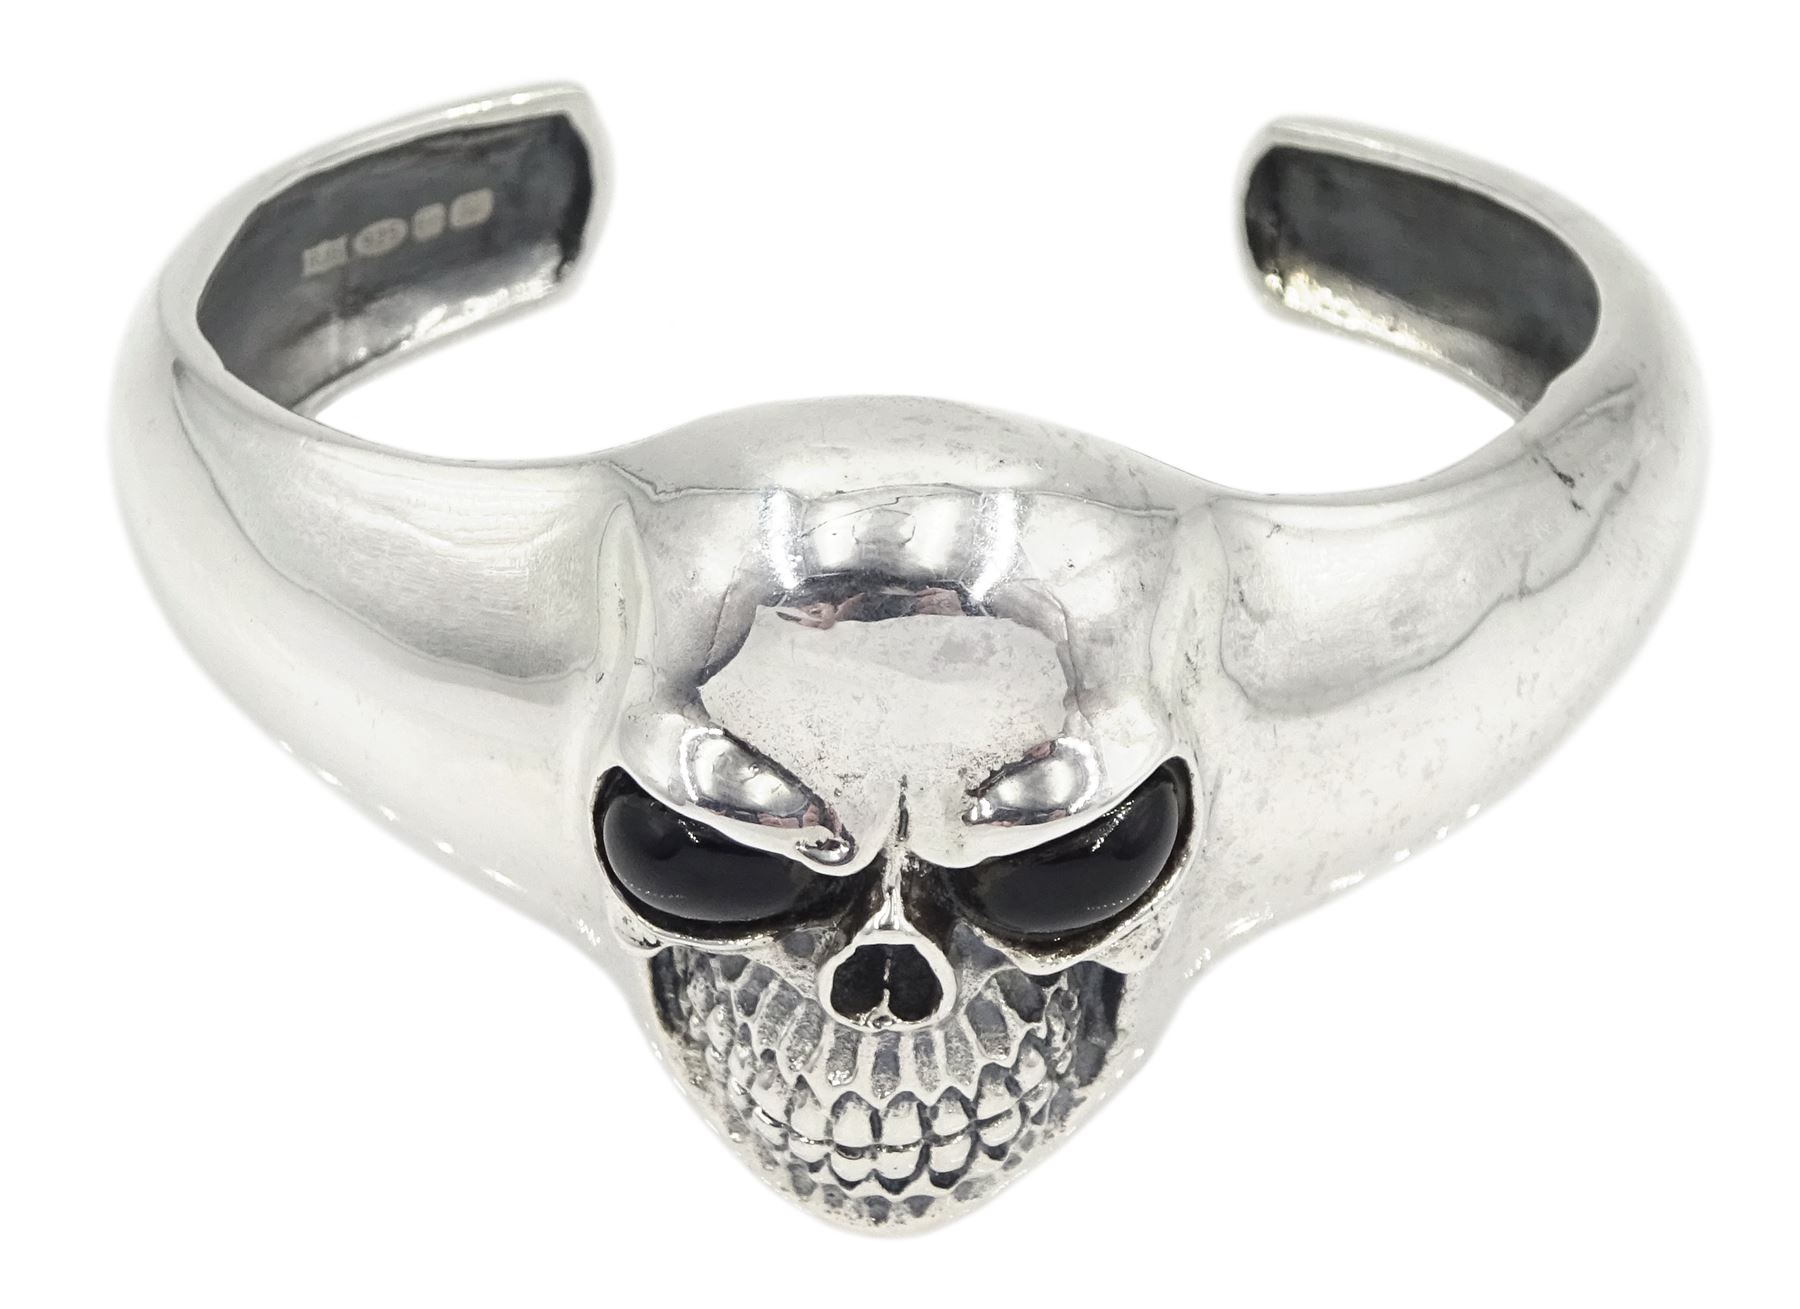 Silver skull torque bangle - Image 2 of 3